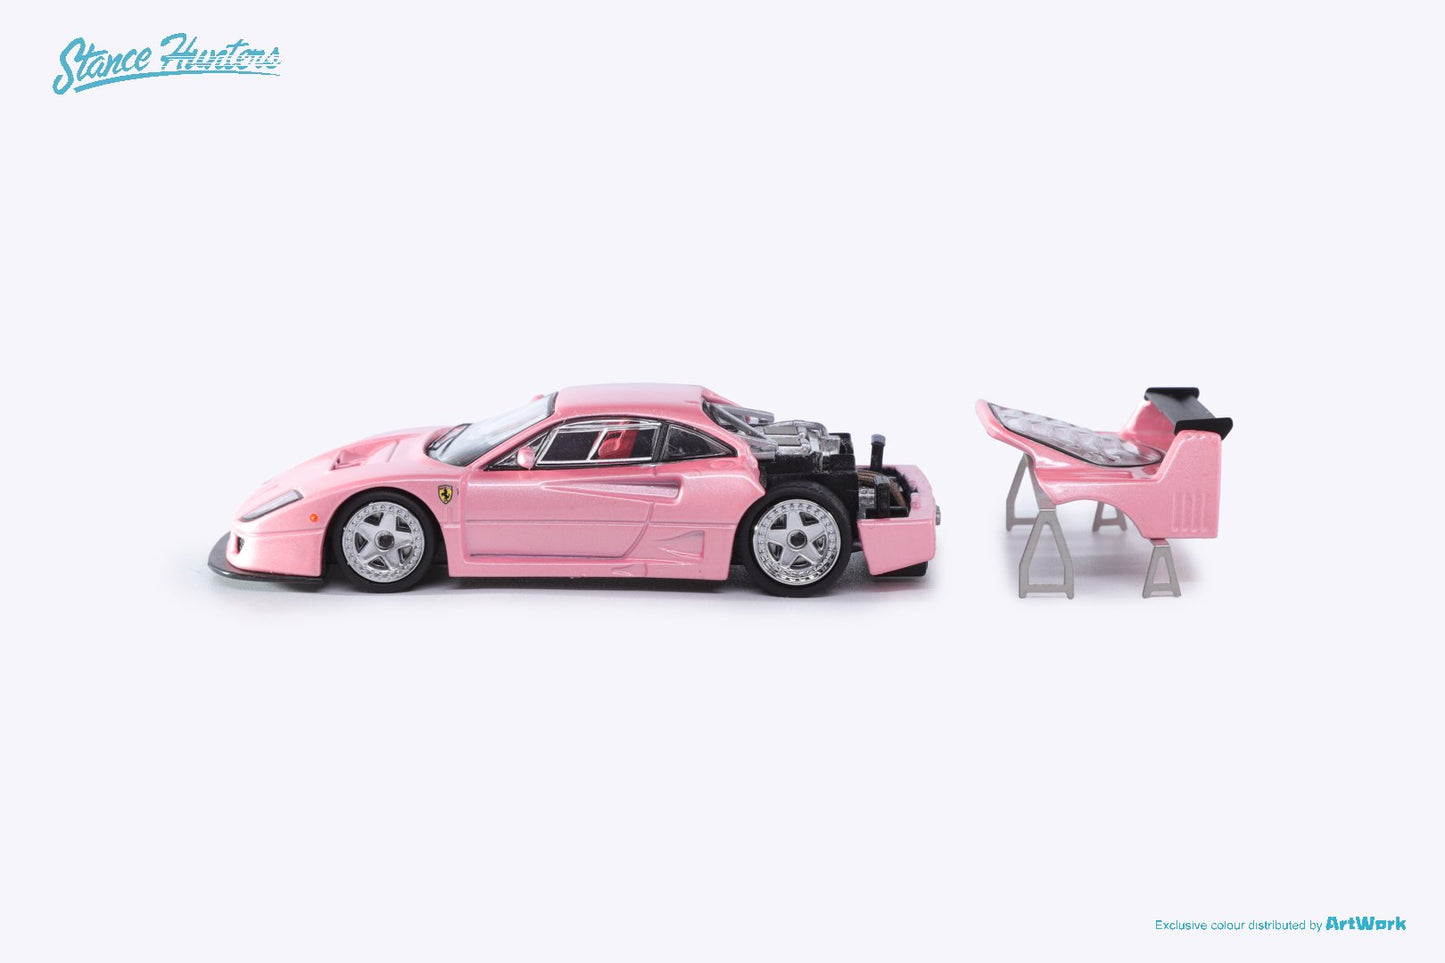 [ PREORDER ] Stance Hunters SH 1/64 Classic supercar series F40 LM diecast Model - Pink - MODEL CAR UKMODEL CAR#INNO64##TARMAC##diecast_model#